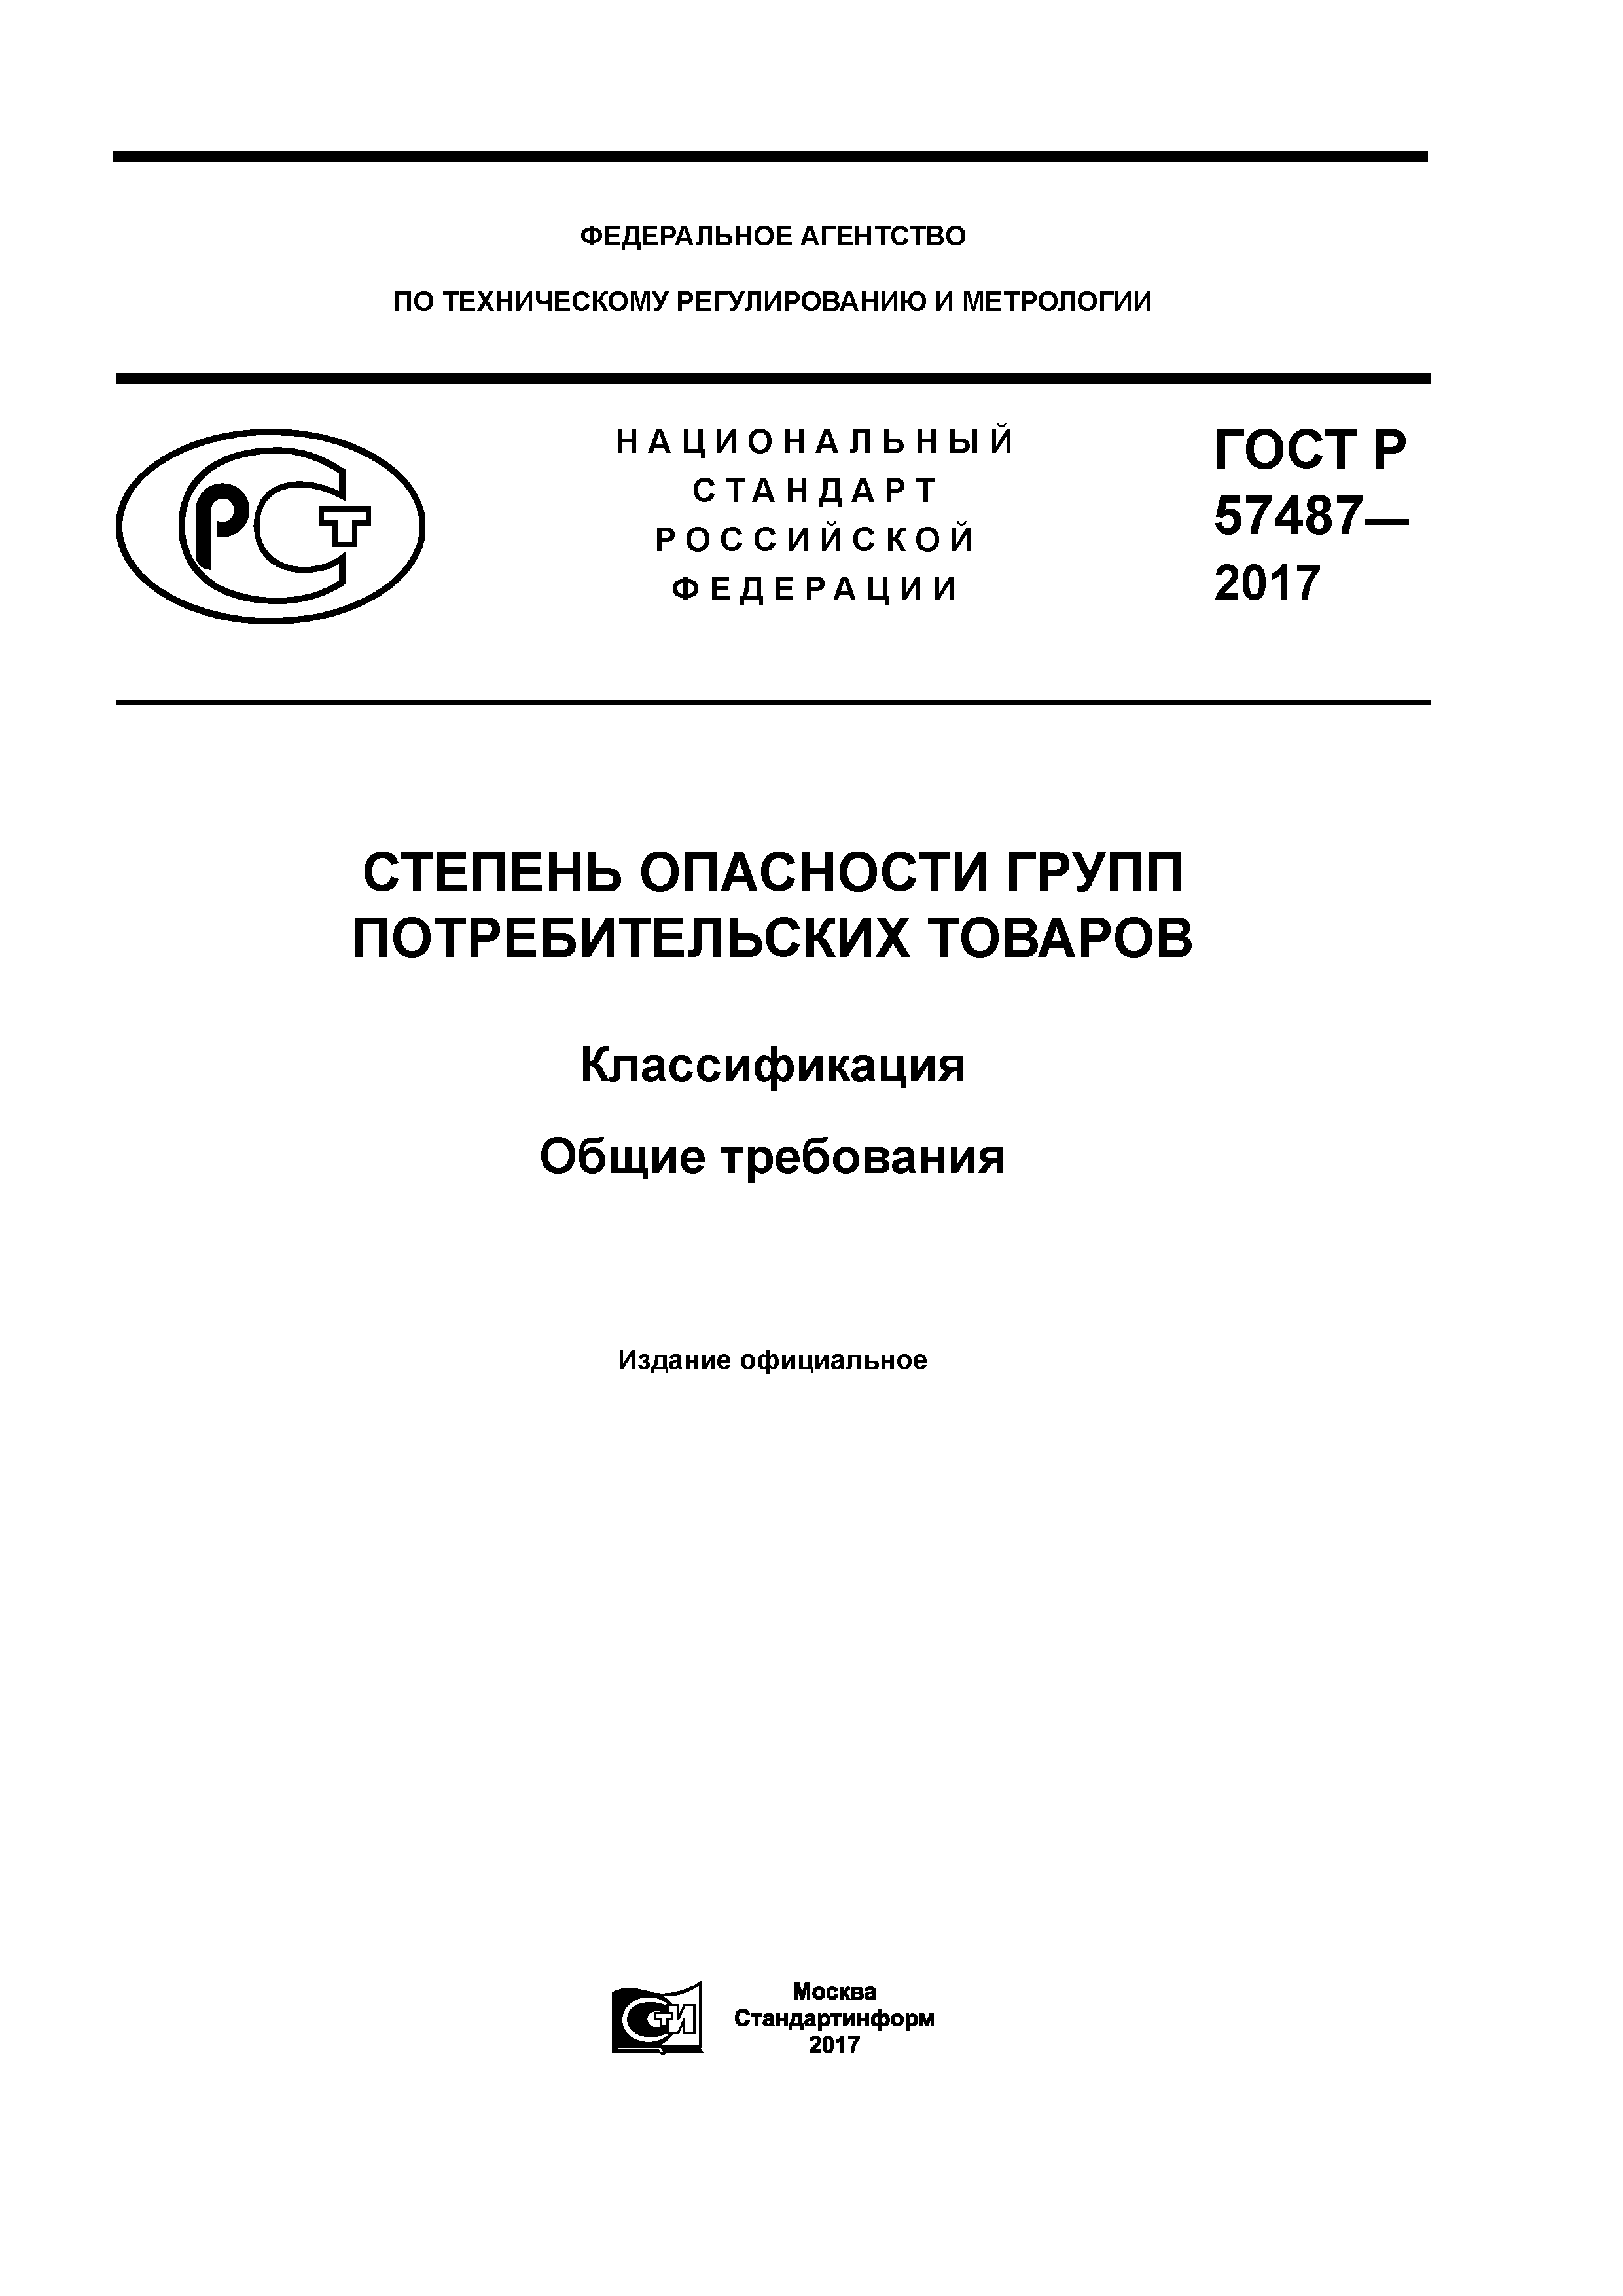 ГОСТ Р 57487-2017